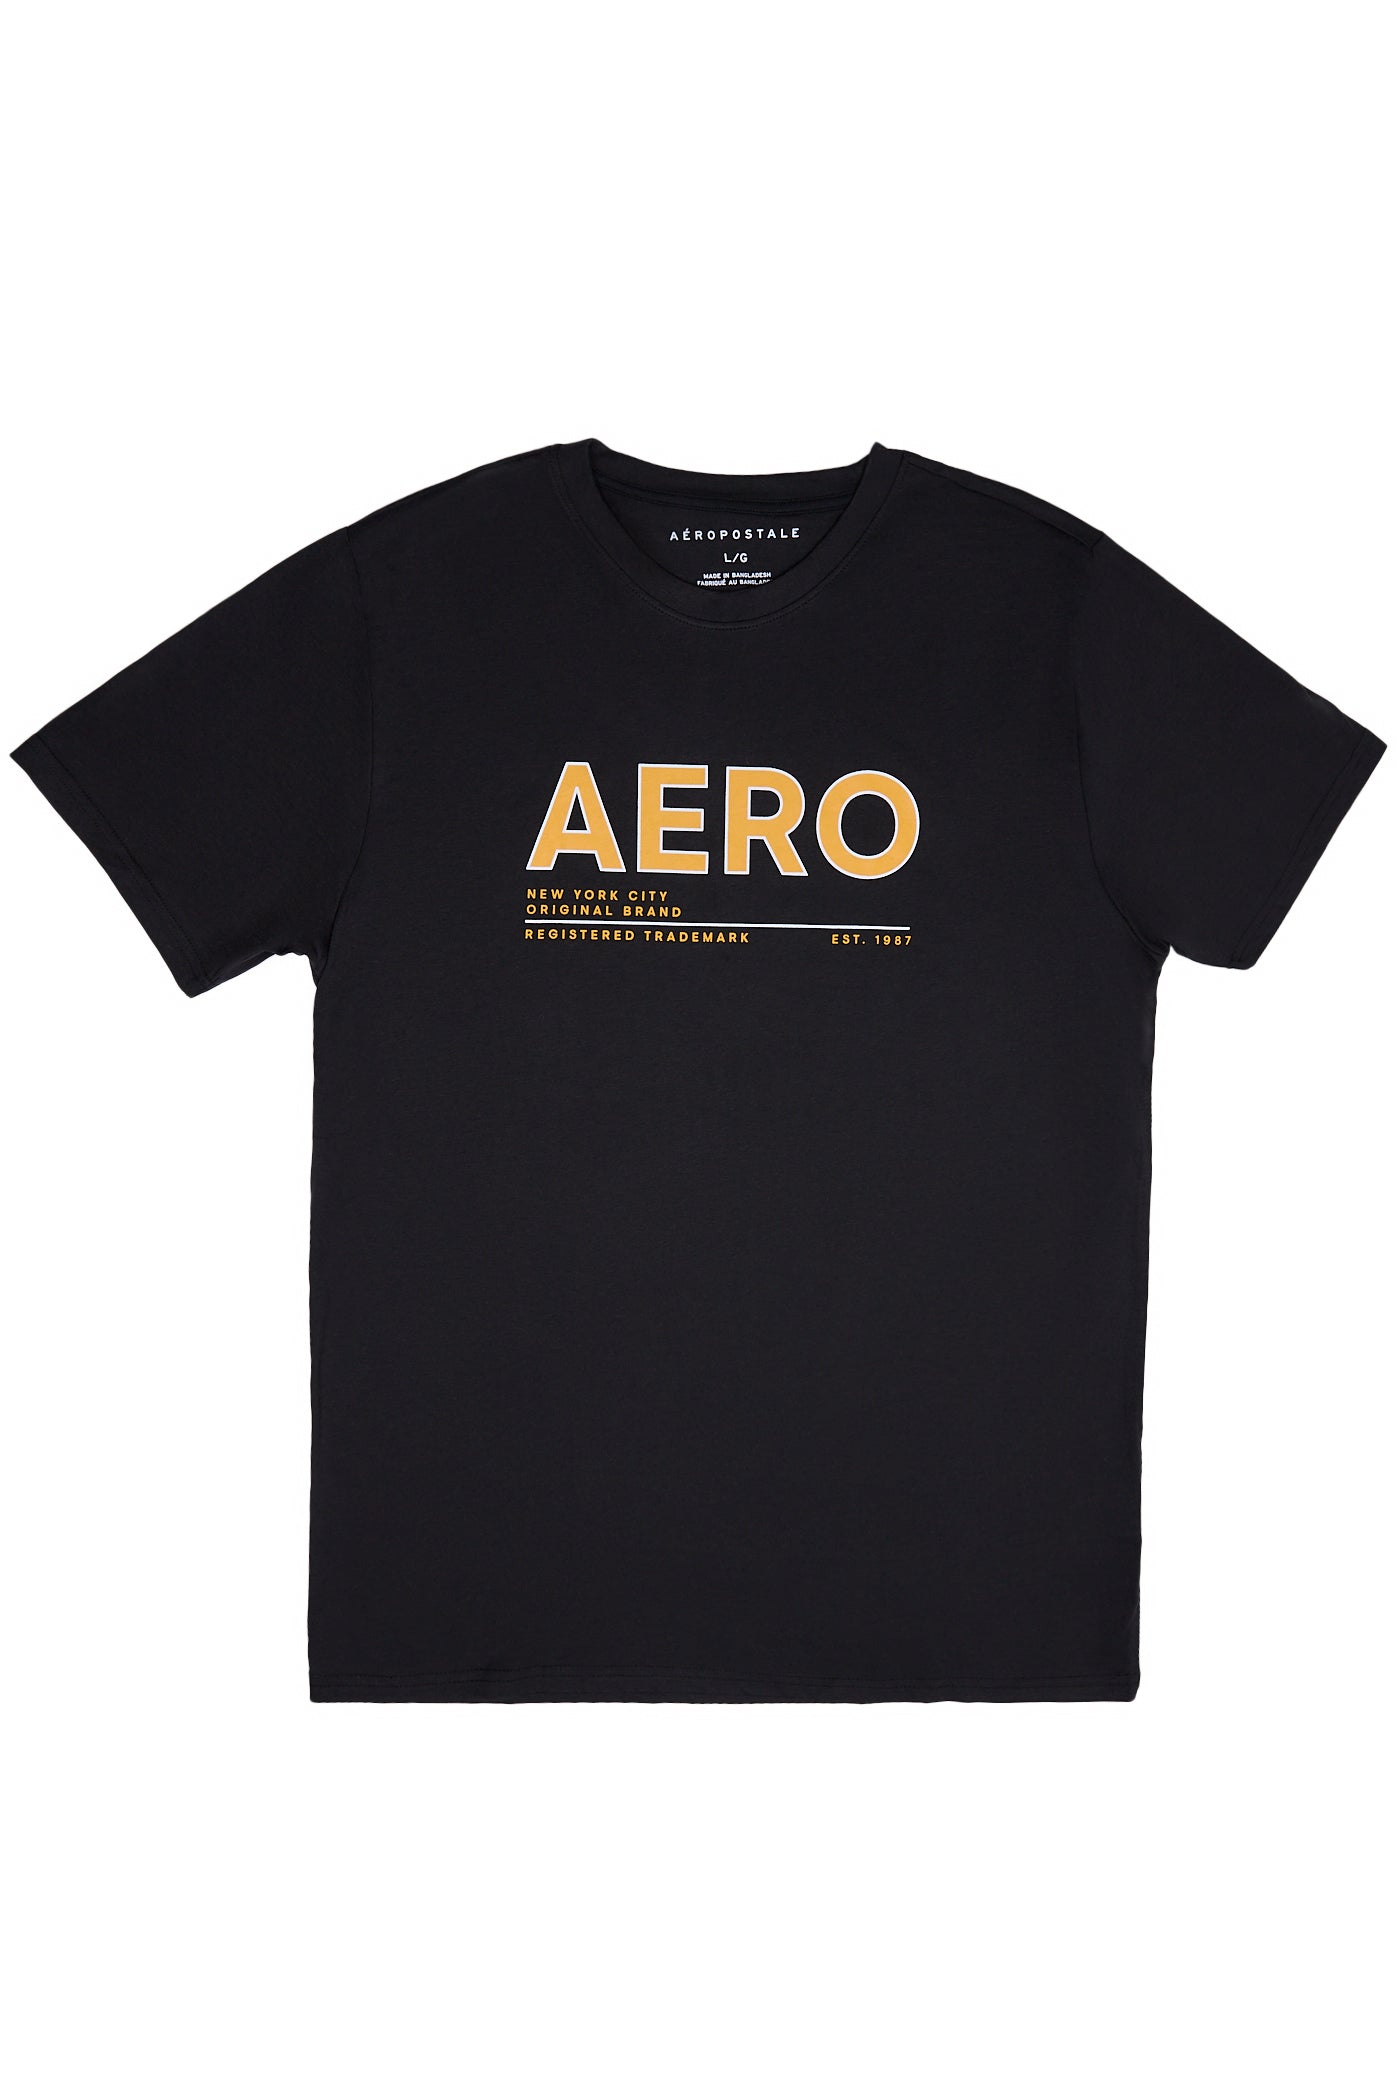 AERO Registered Trademark Graphic Tee